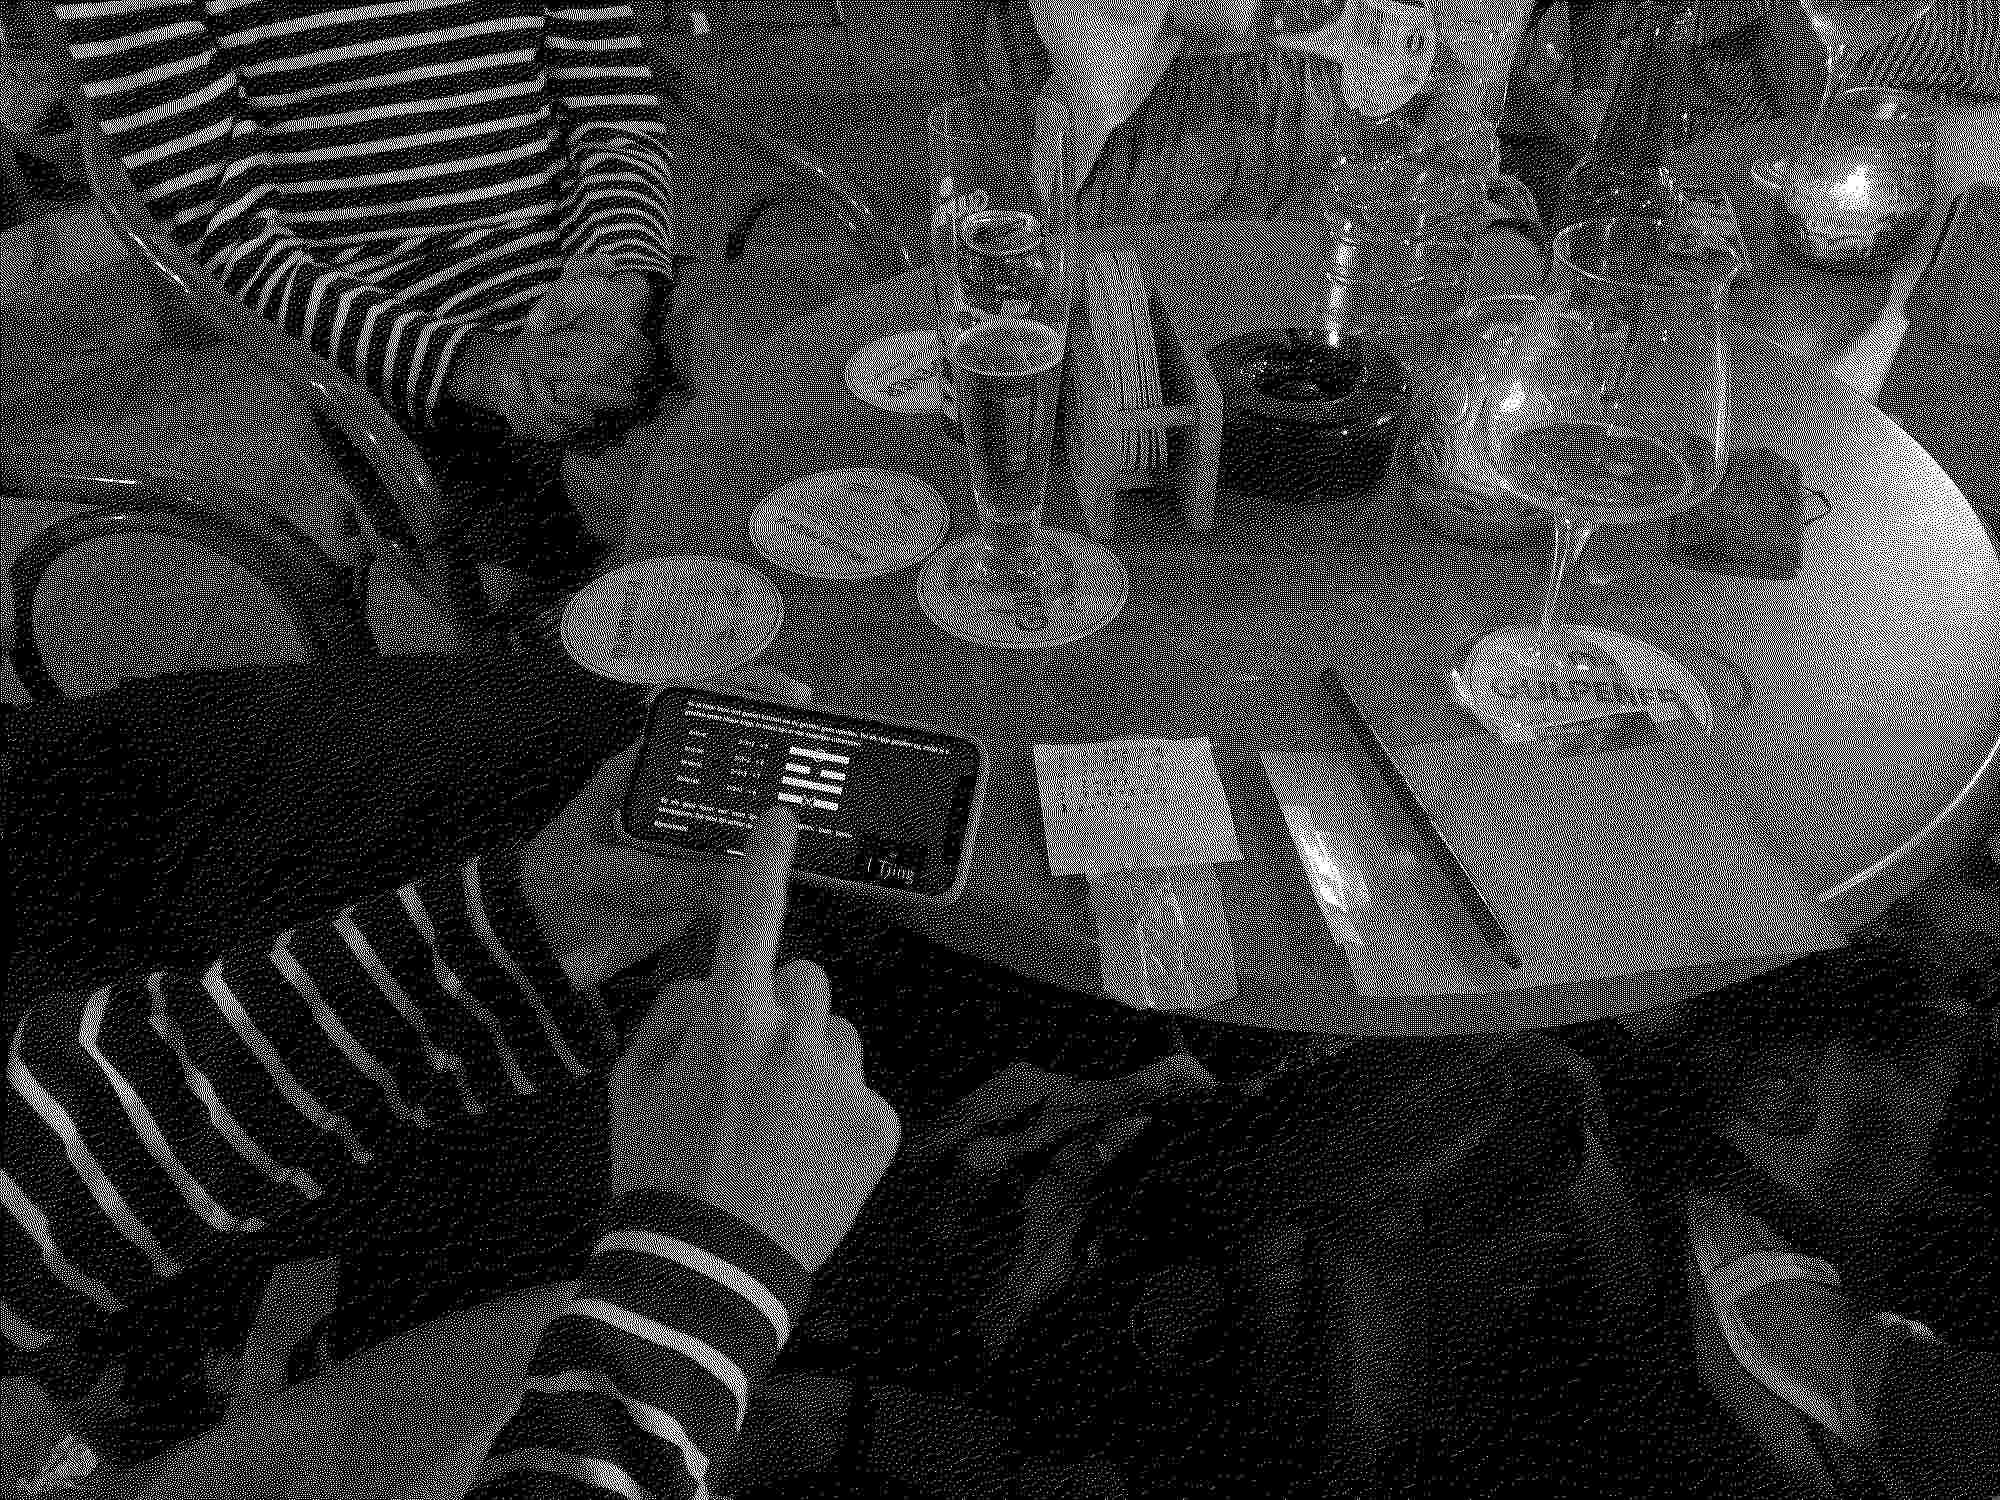 I Ching reading at a bar in Rotterdam